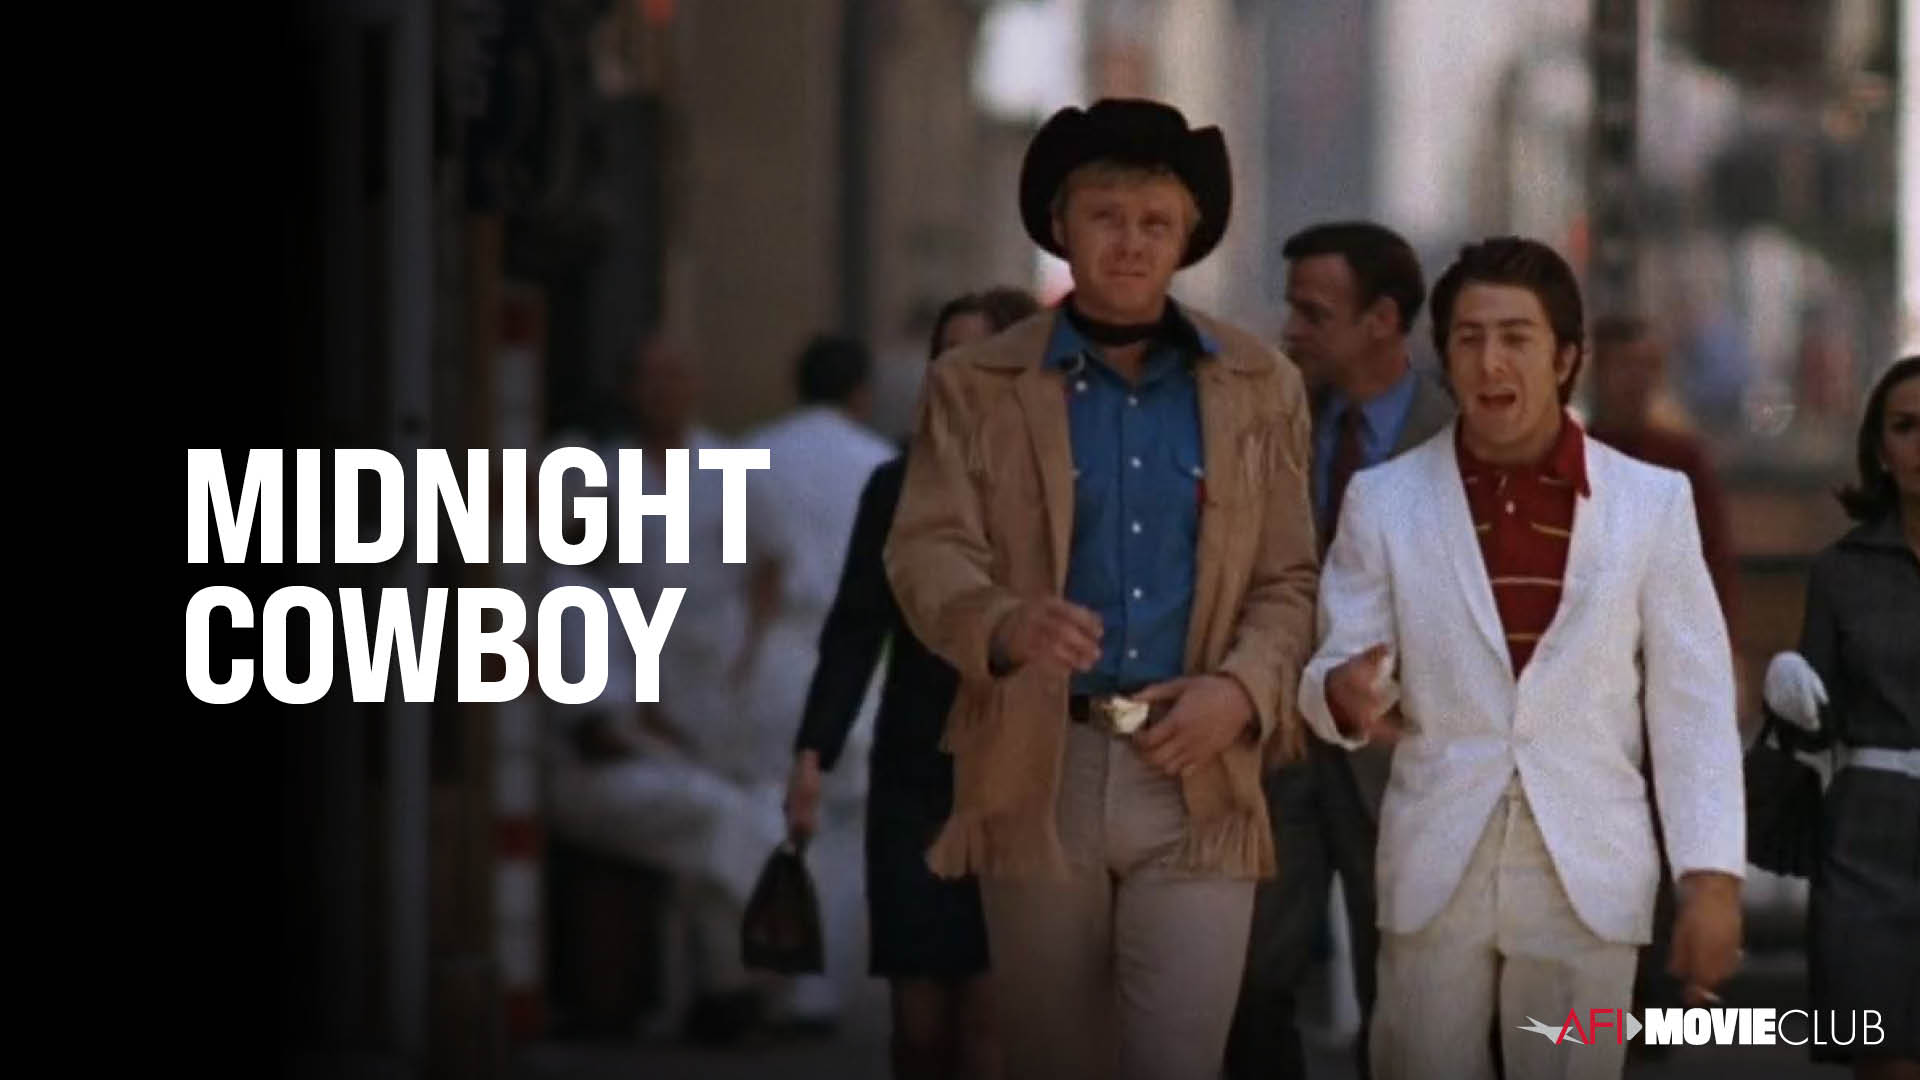 Midnight Cowboy Film Still - Dustin Hoffman and Jon Voight